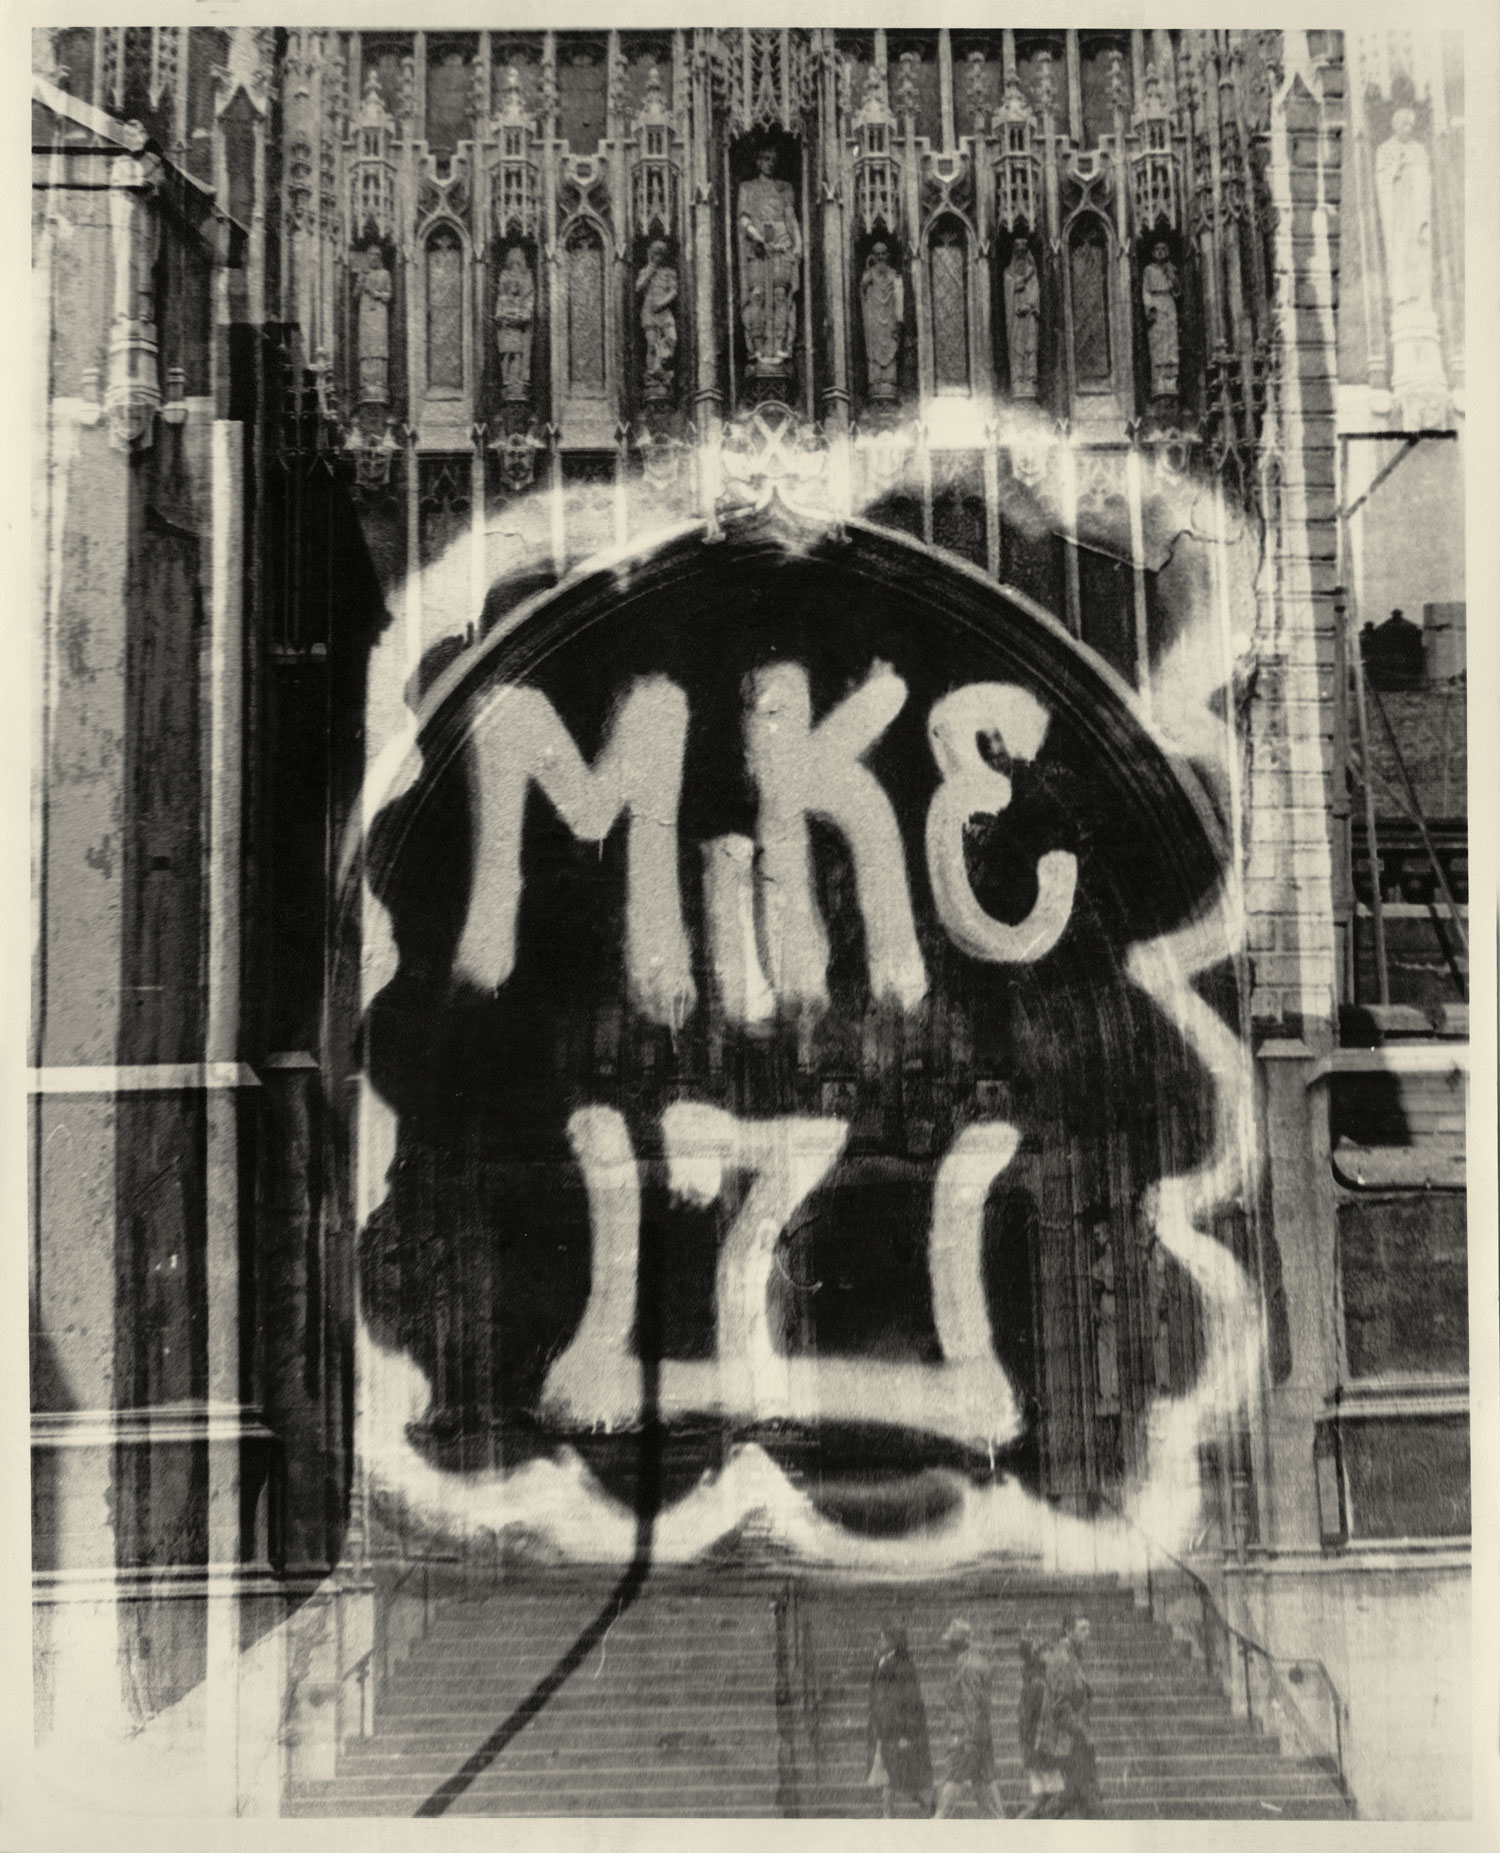 MIKE 171 double exposure, circa 1971.